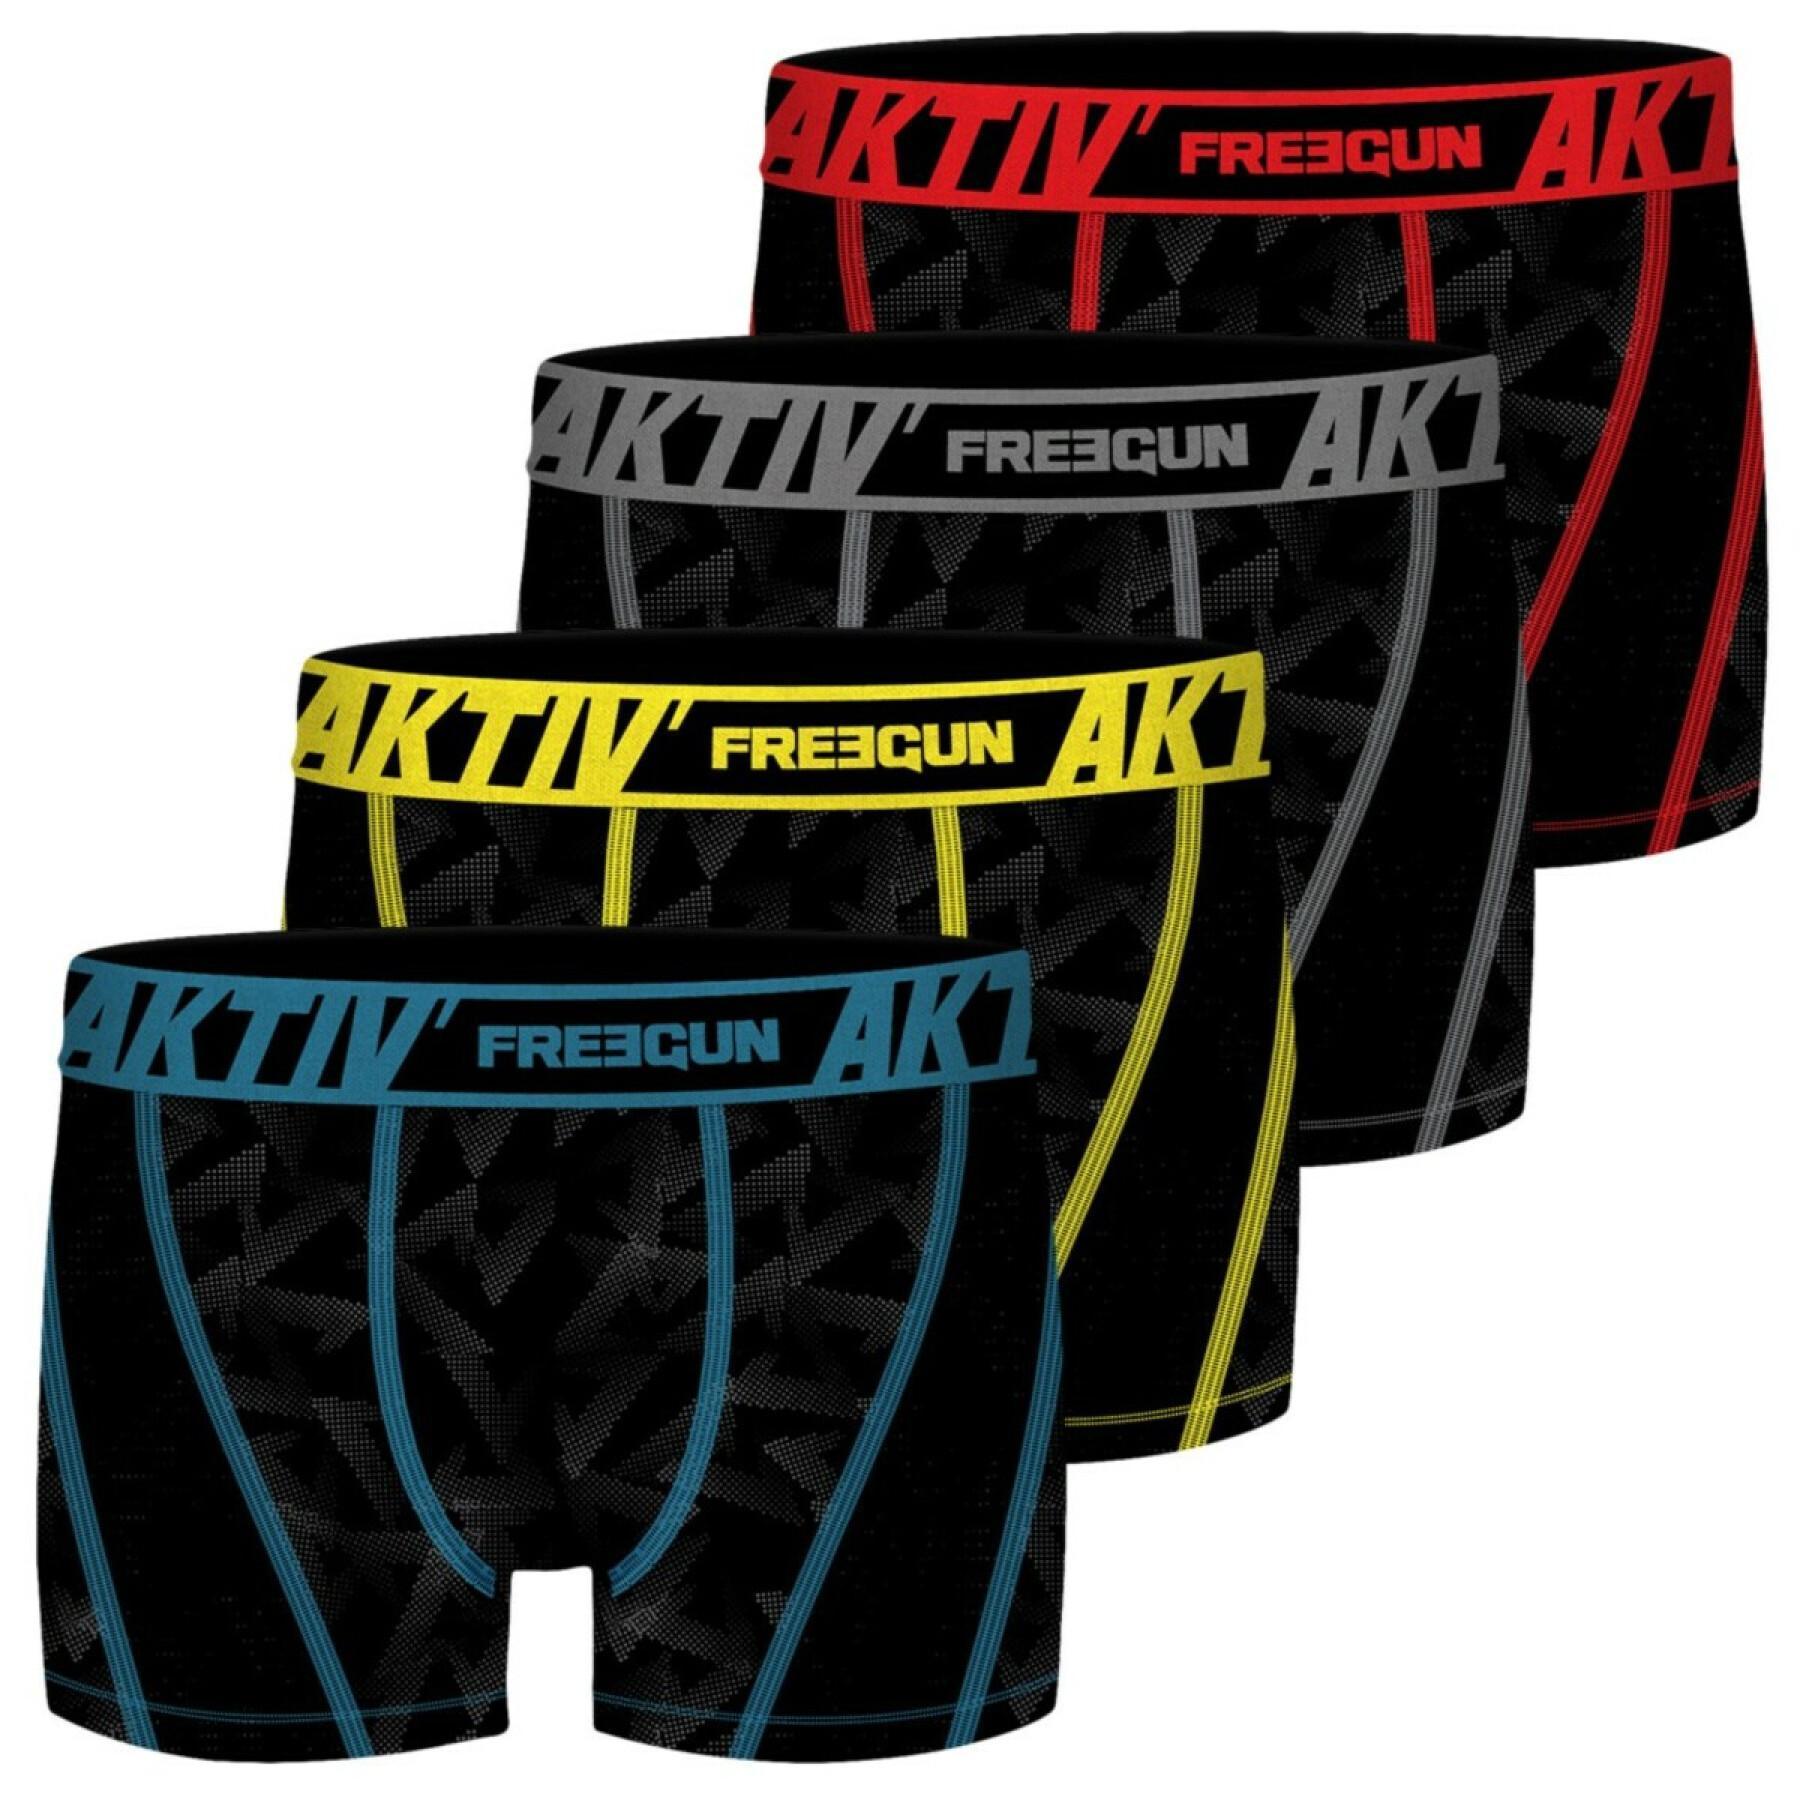 Boxer shorts with colored stitching Freegun Aktiv (x4)